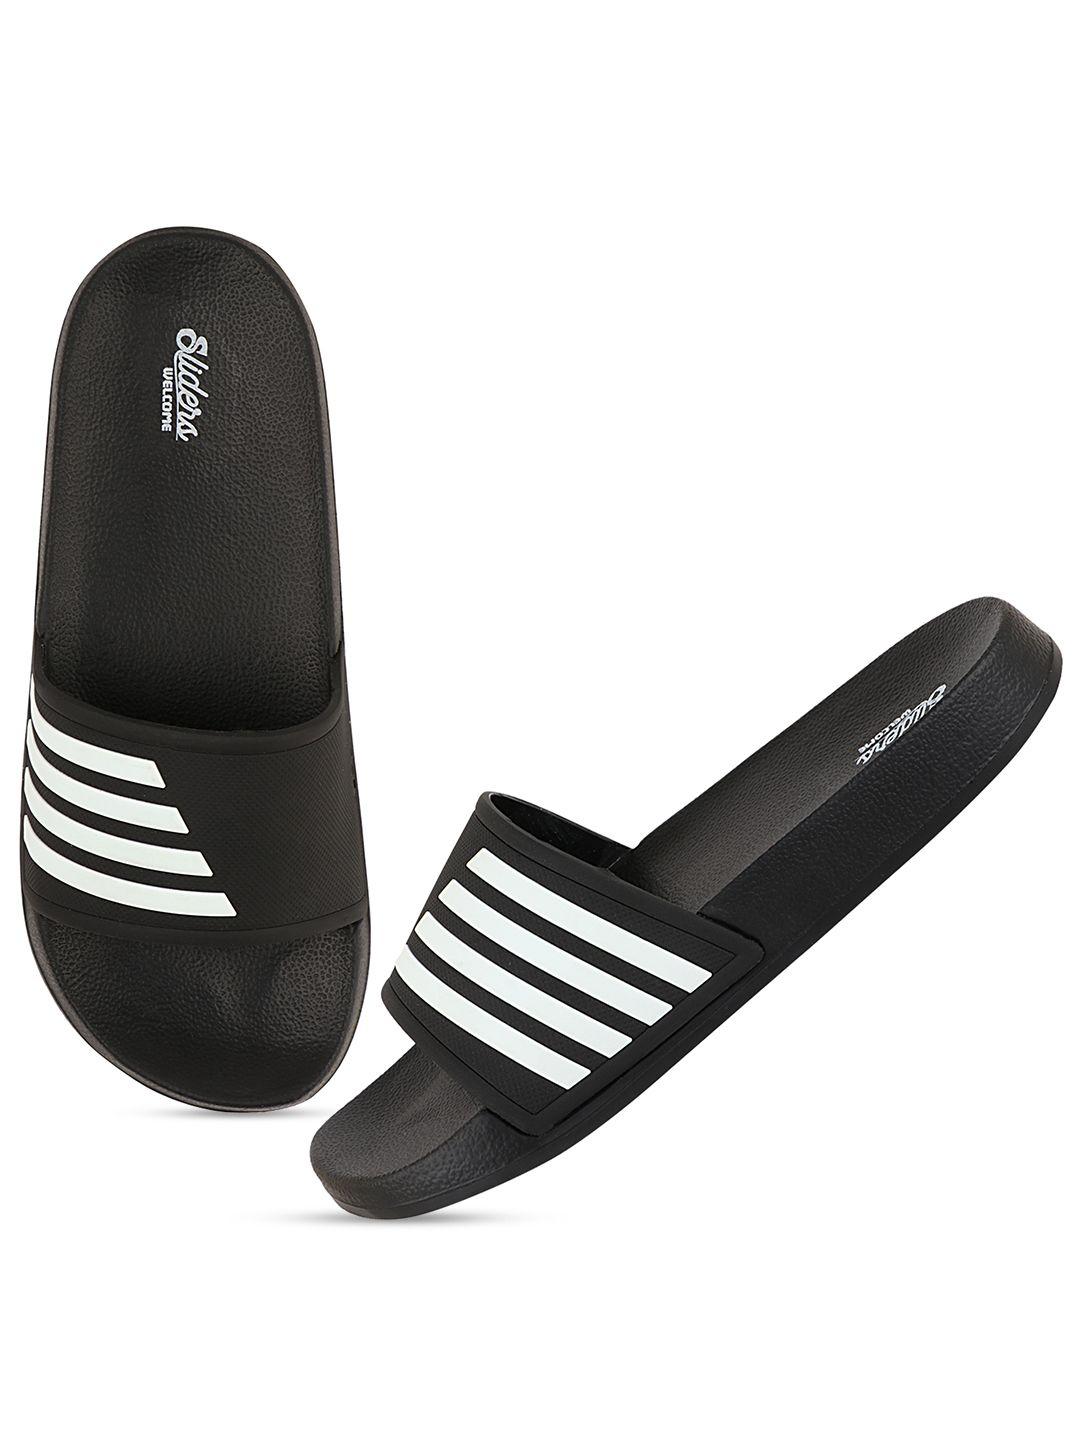 welcome men black & white striped sliders flip flop